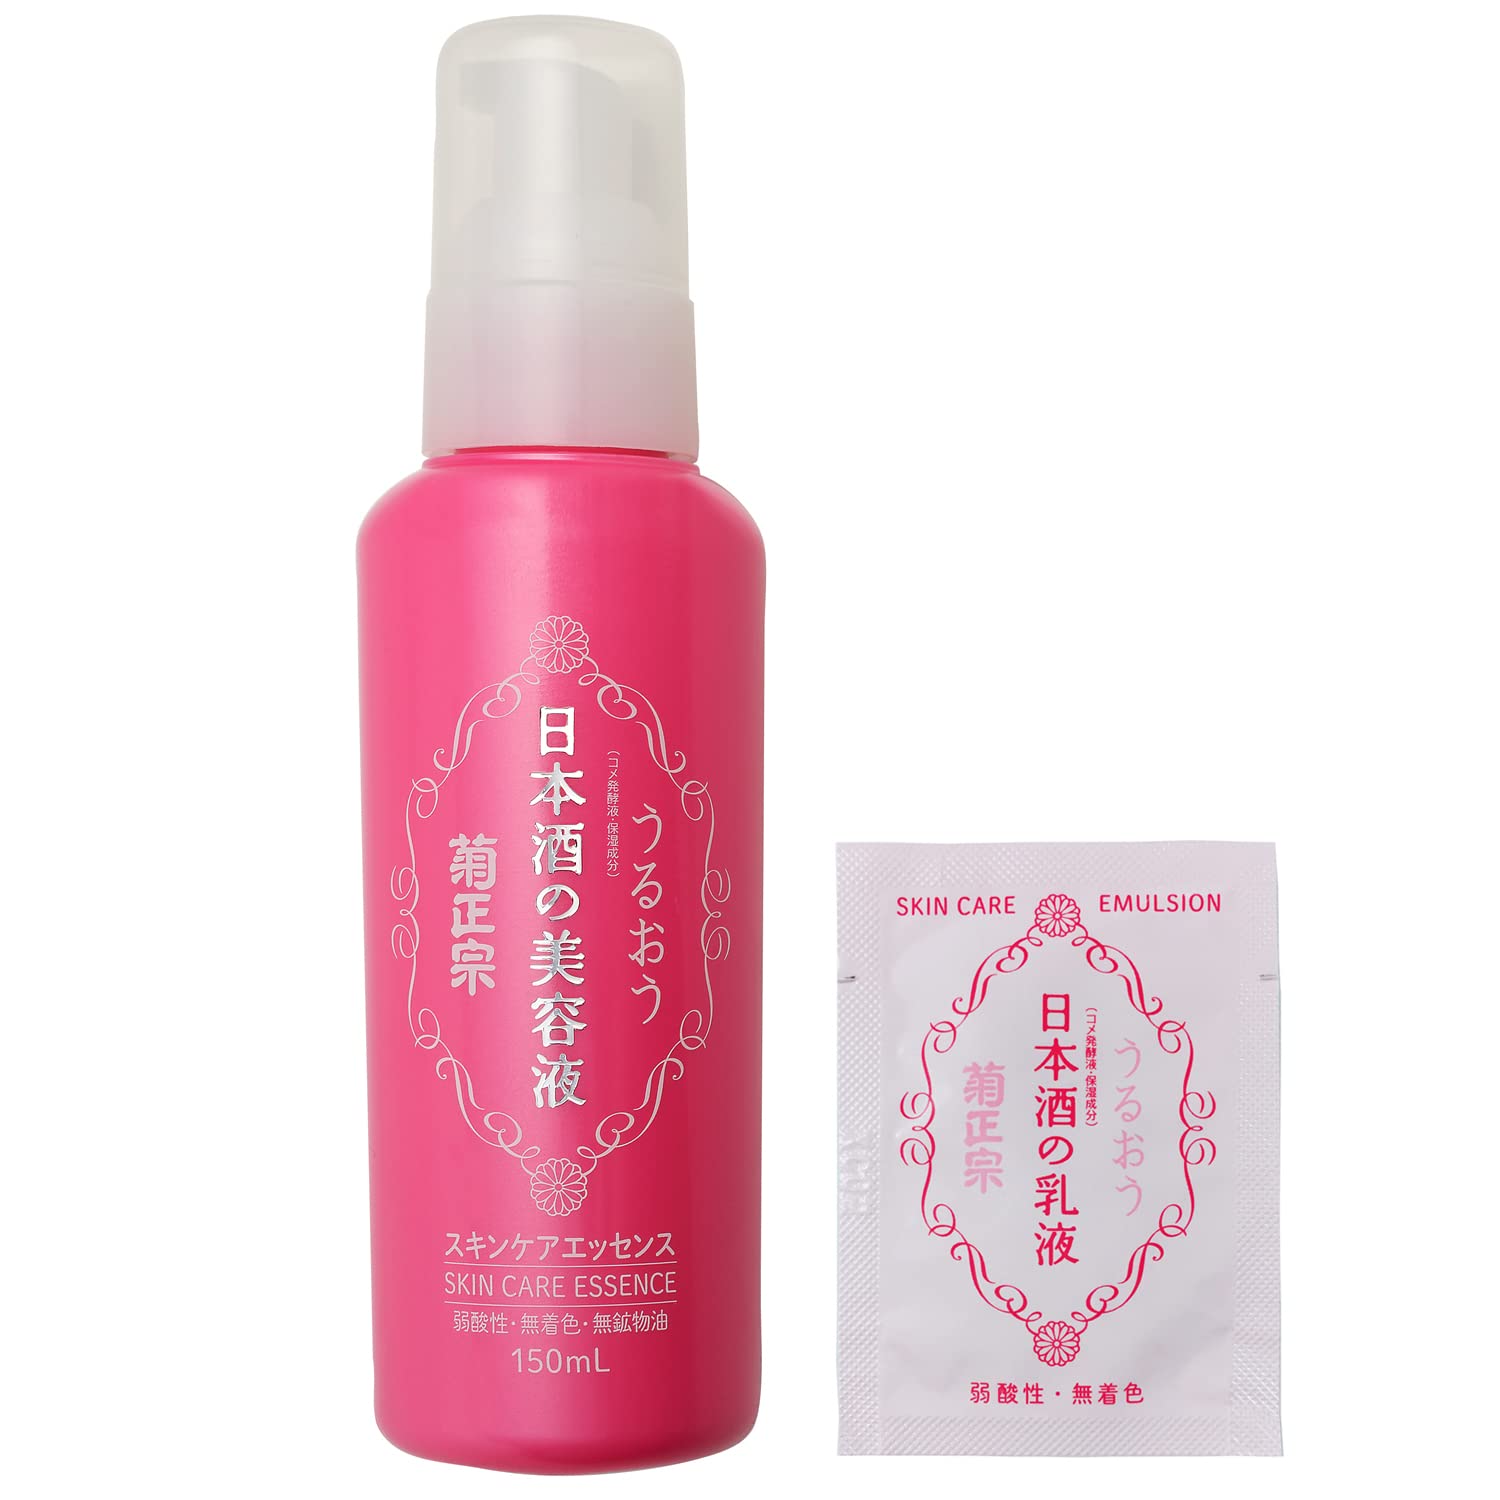 Canmake Marshmallow Finish Matte Beige Ocher Face Powder 10.0G in Pink Package - YOYO JAPAN